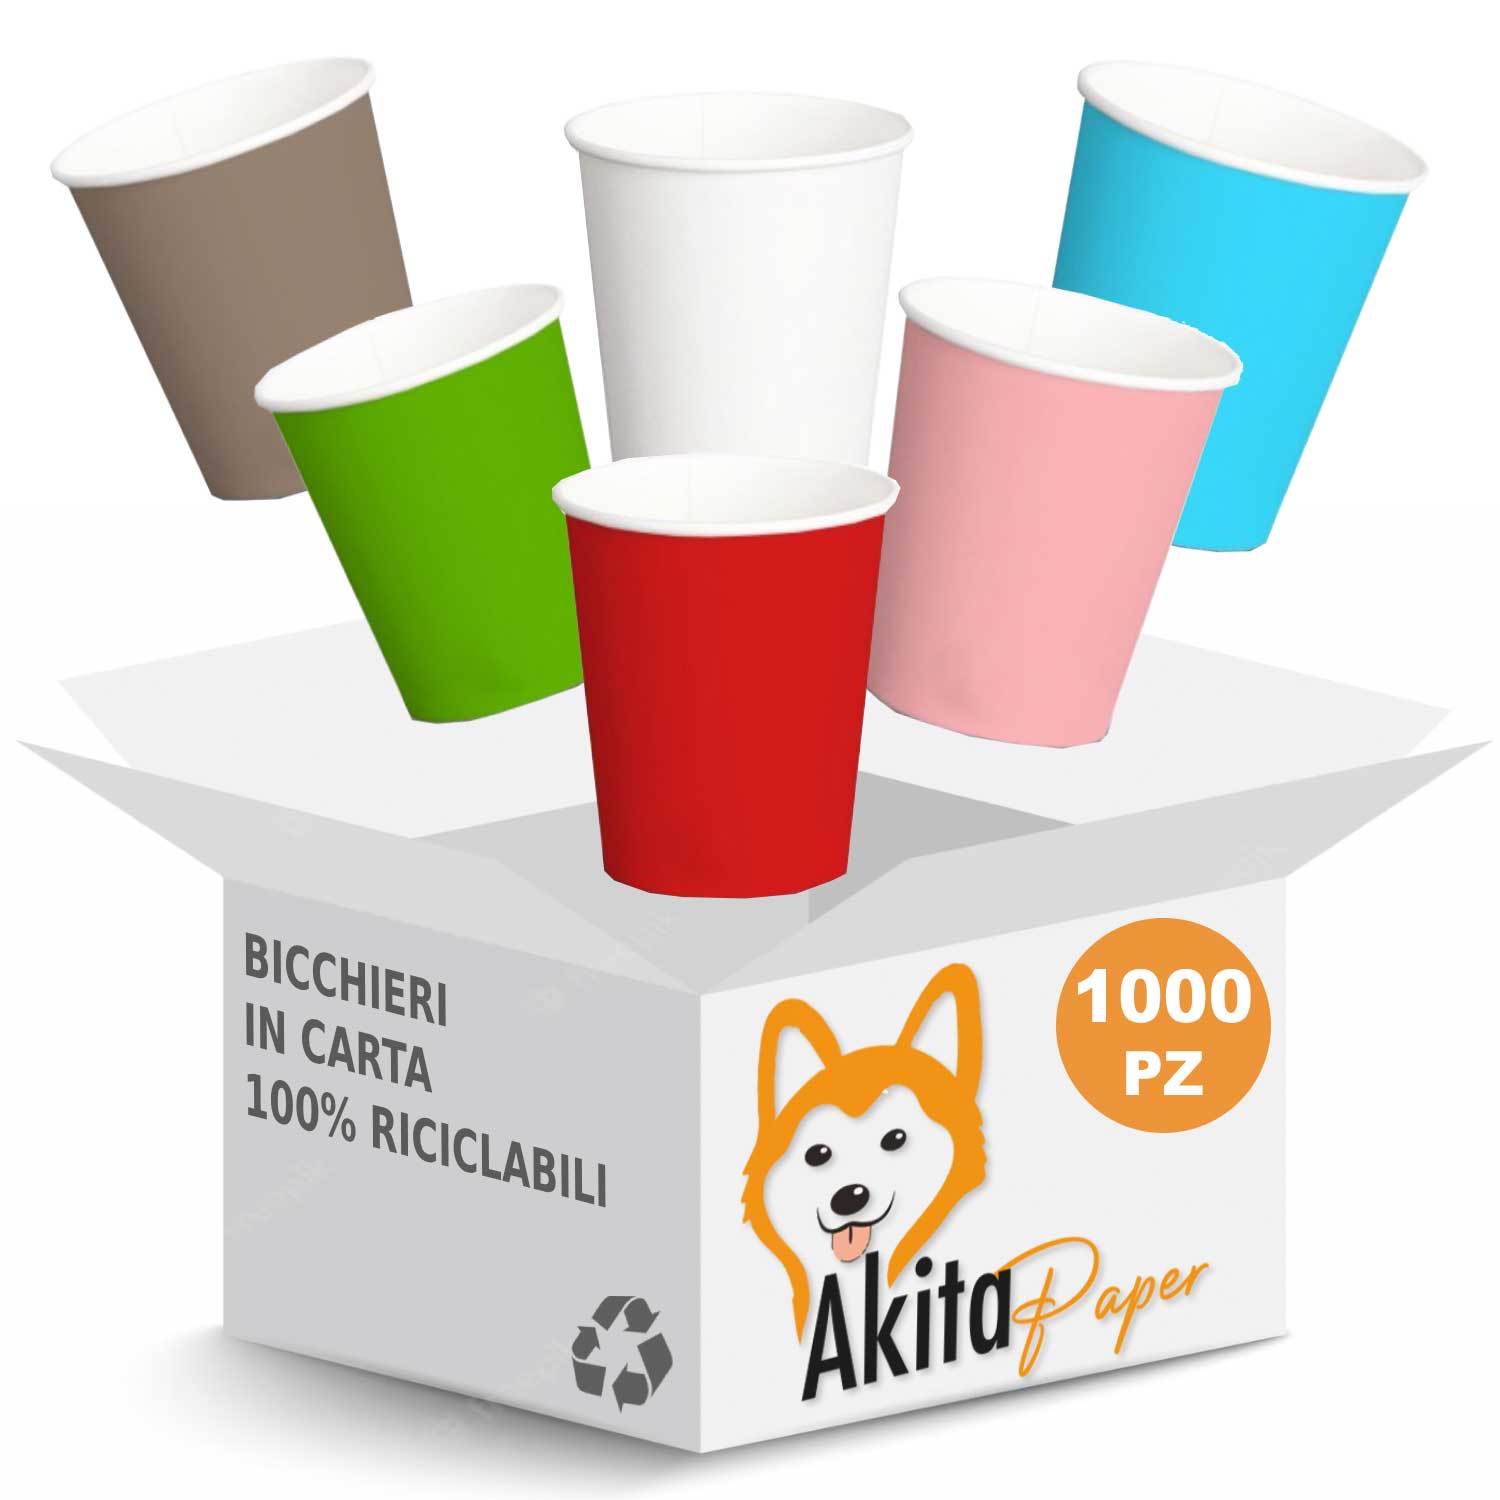 Akitaink 300 pz bicchieri monouso in carta colorati da 180-200 ml bicchiere com